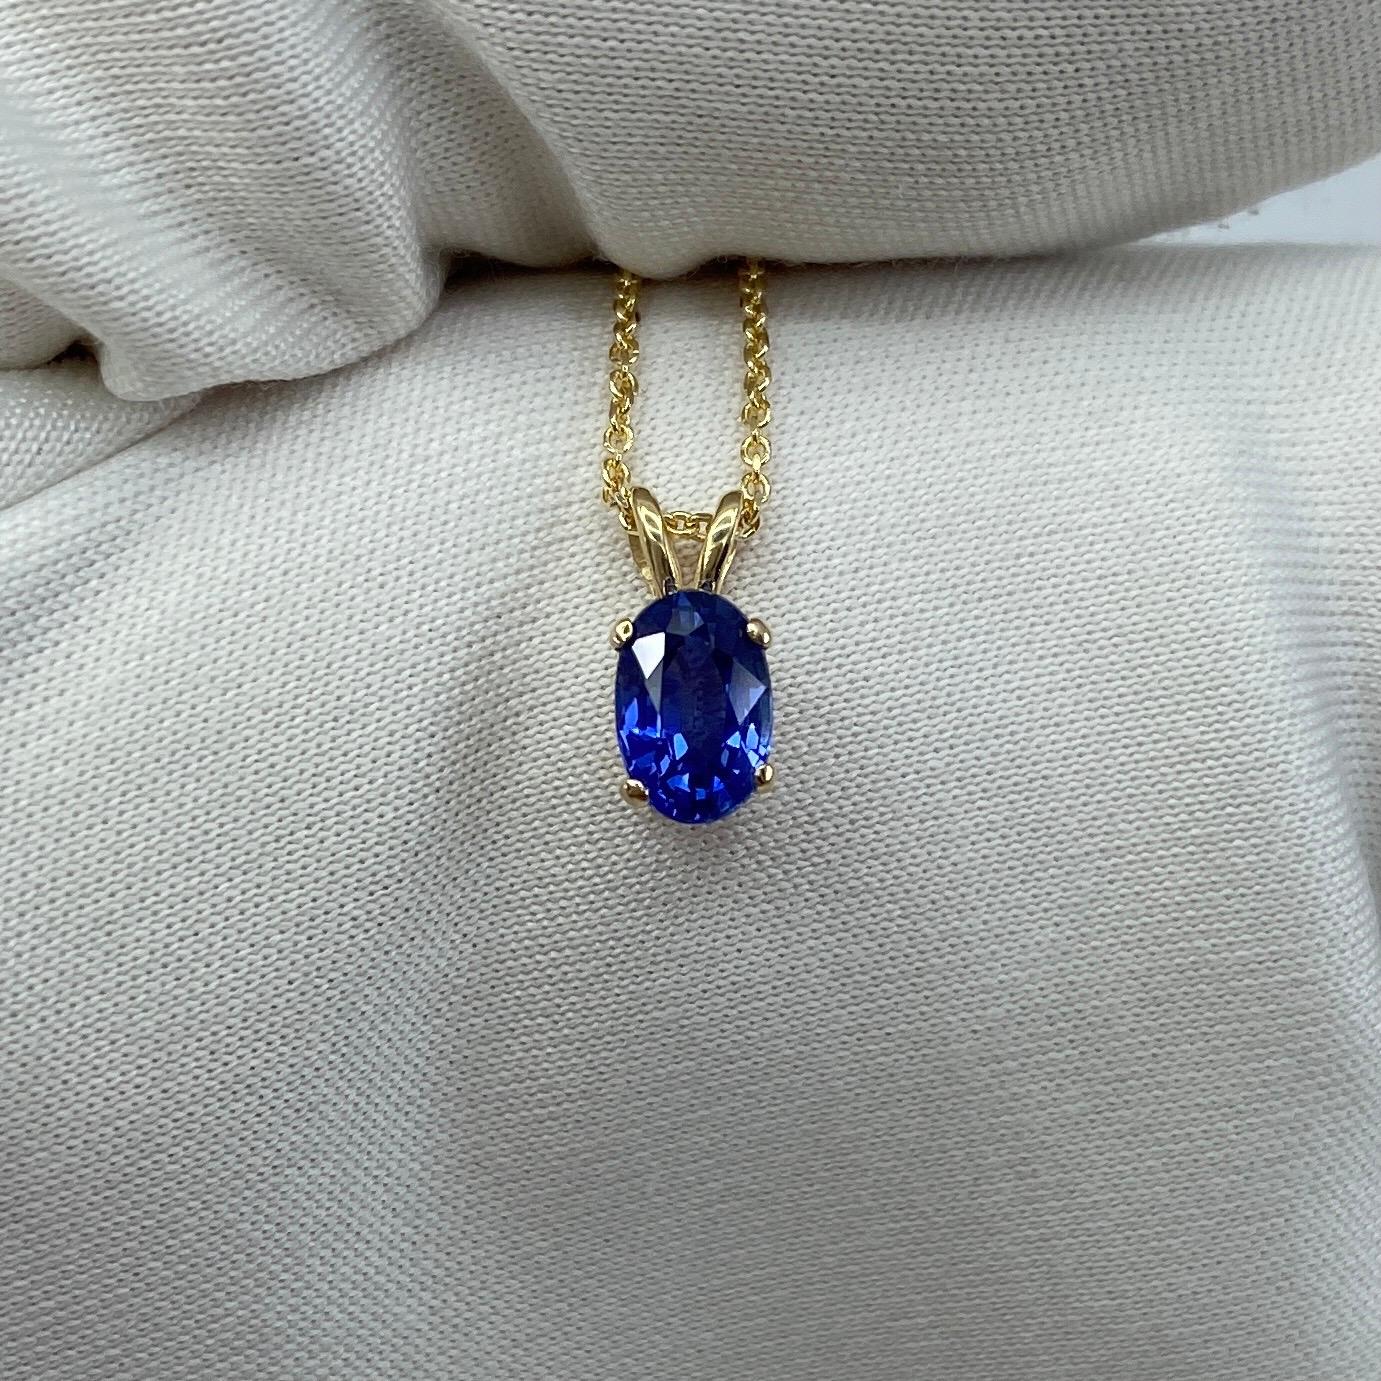 Fine Vivid Blue Oval Cut Sapphire Yellow Gold Solitaire Pendant Necklace 1